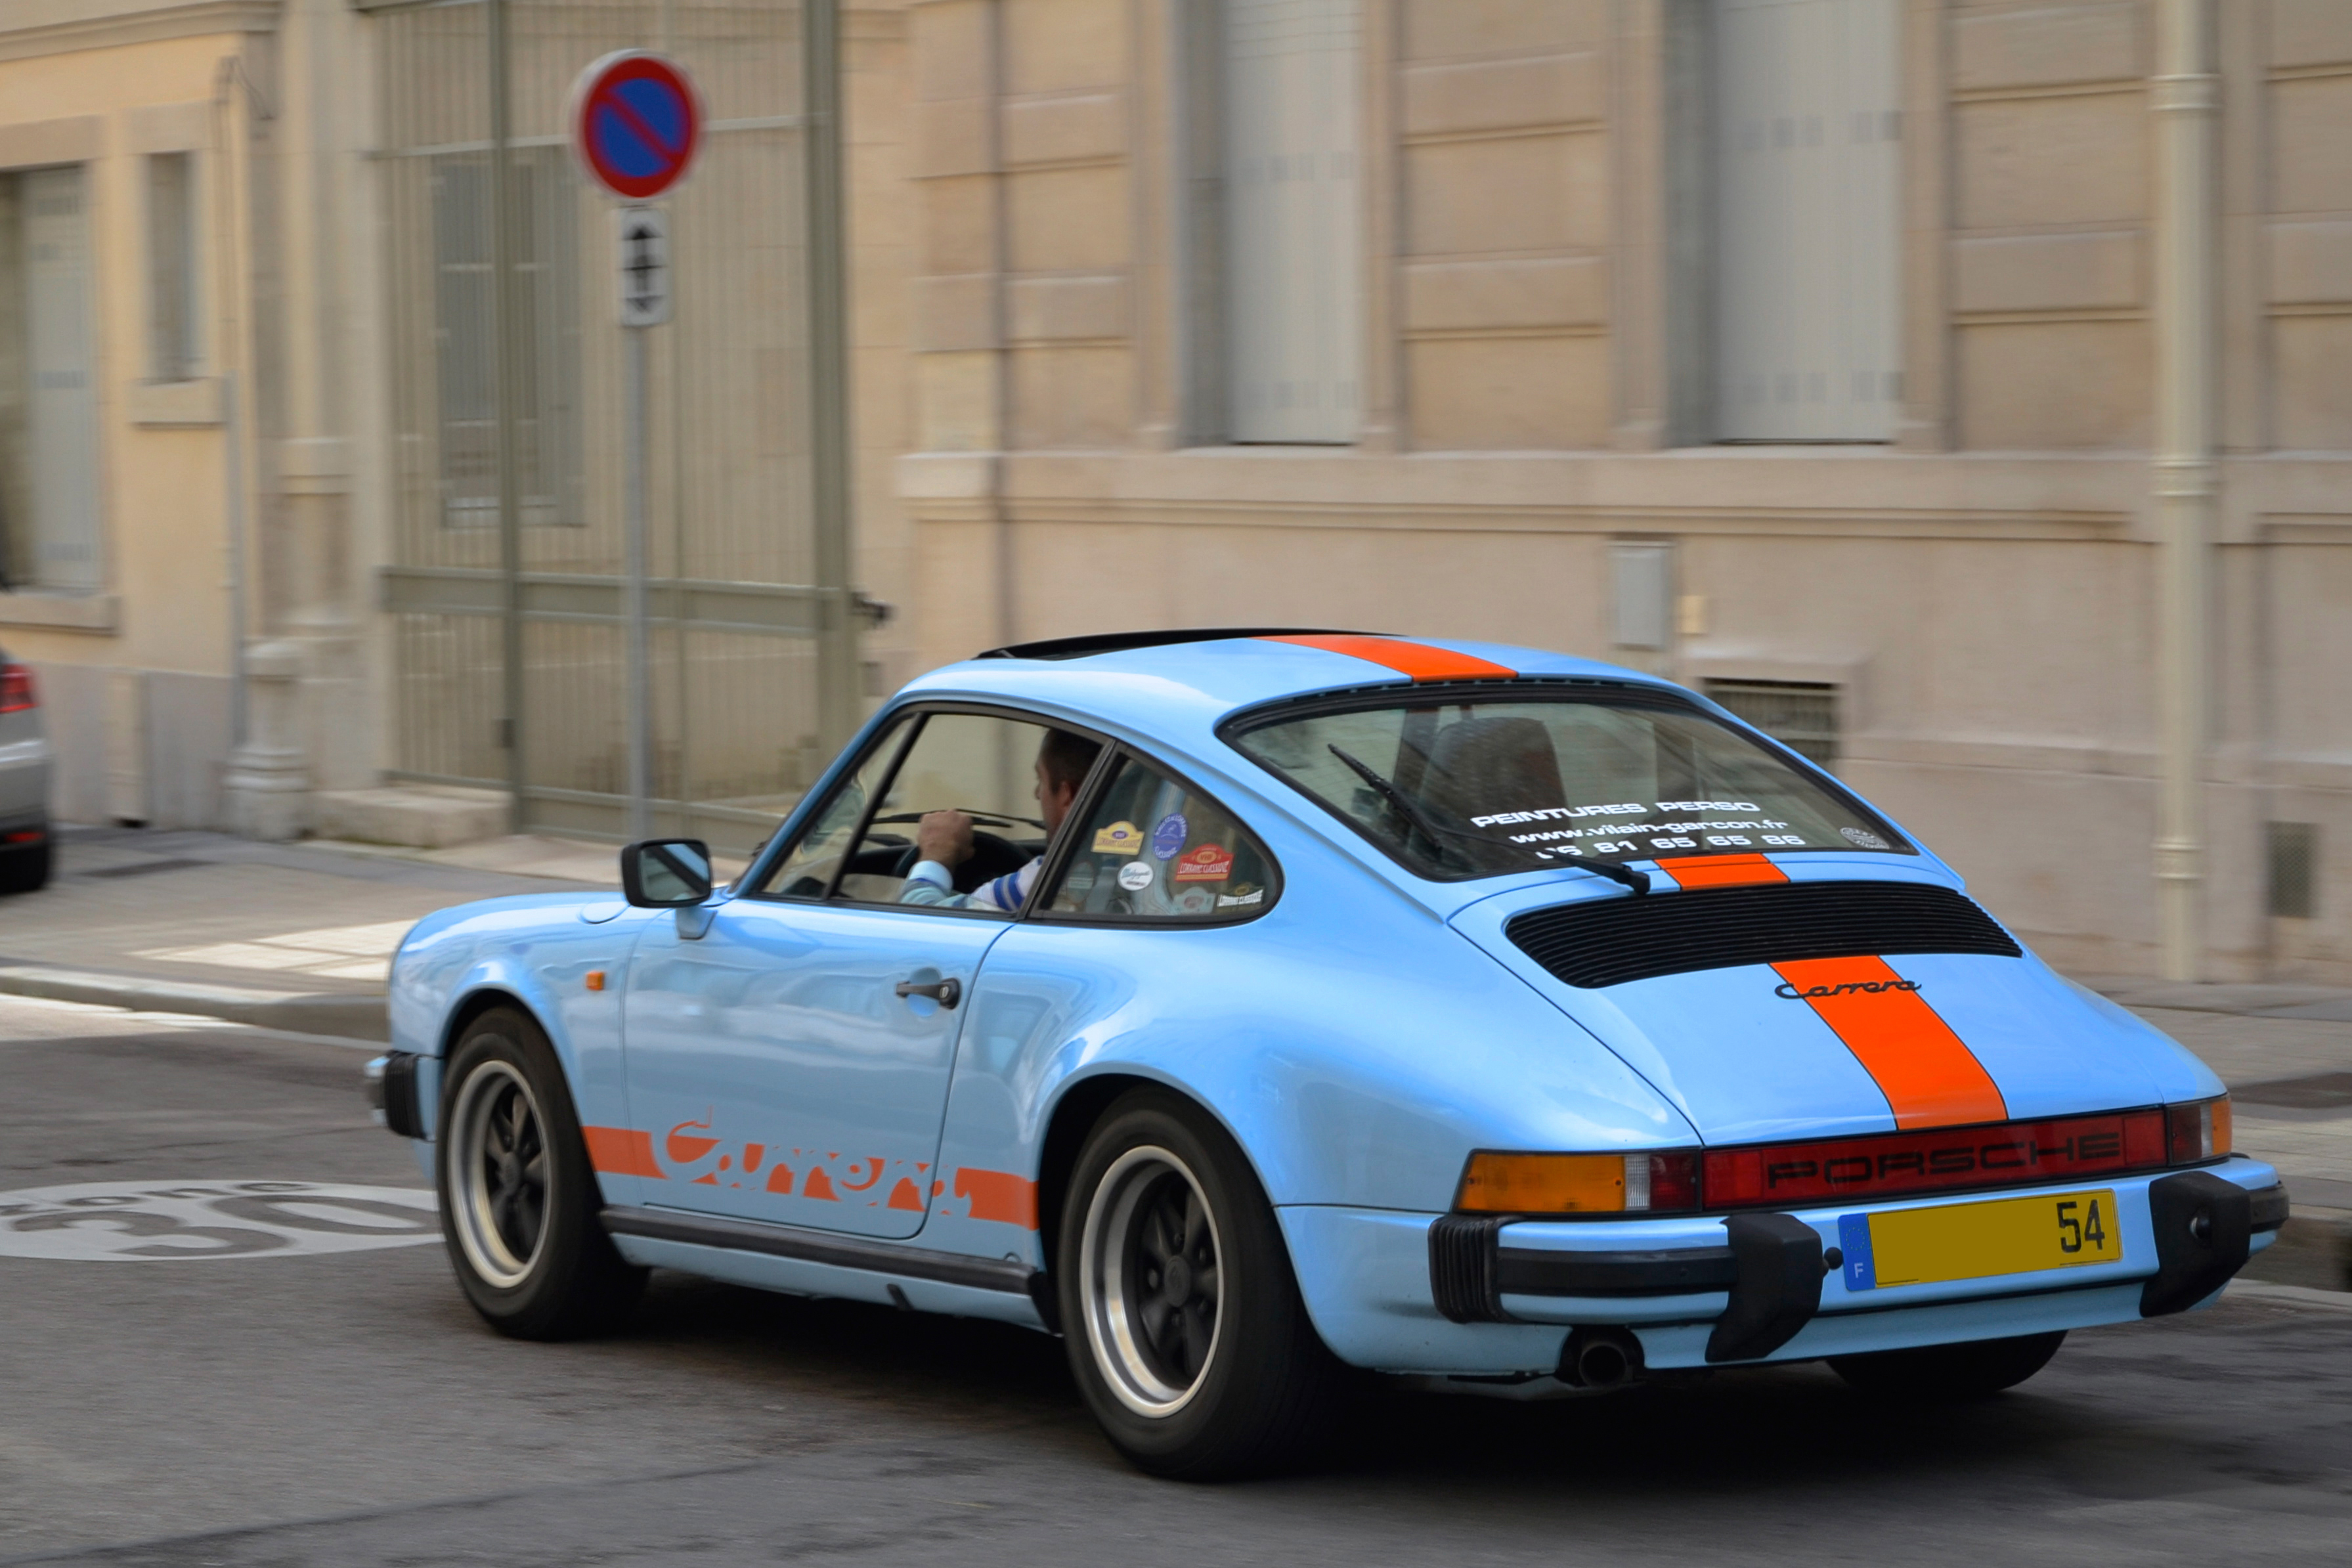 Porsche_911_G-series_Carrera_coupe_Gulf_colors_(7717981560).jpg